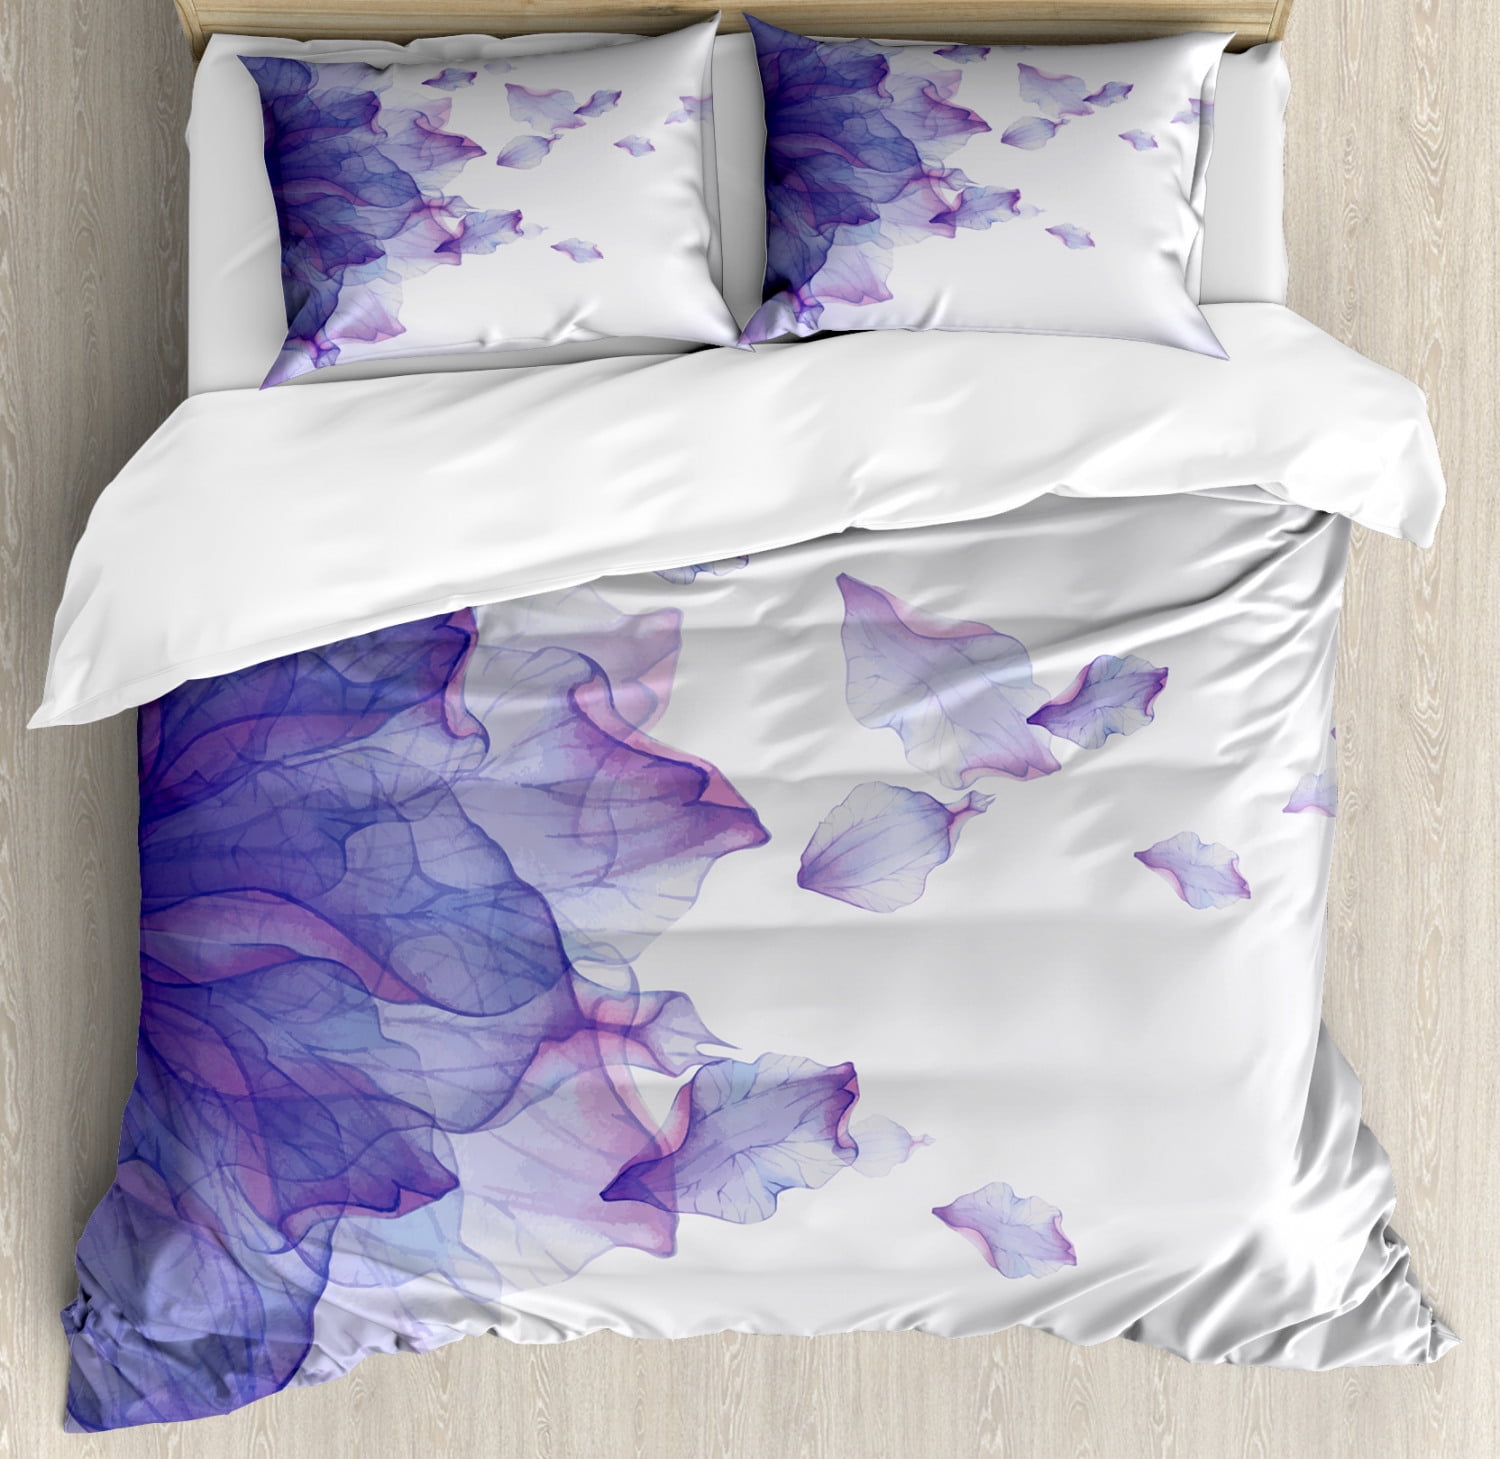 Pattern Purple and Violet Abstract Leaves Duvet Cover or Comforter Girl Bedroom Gift Shams Dorm Watercolor Lavender Boho Christmas